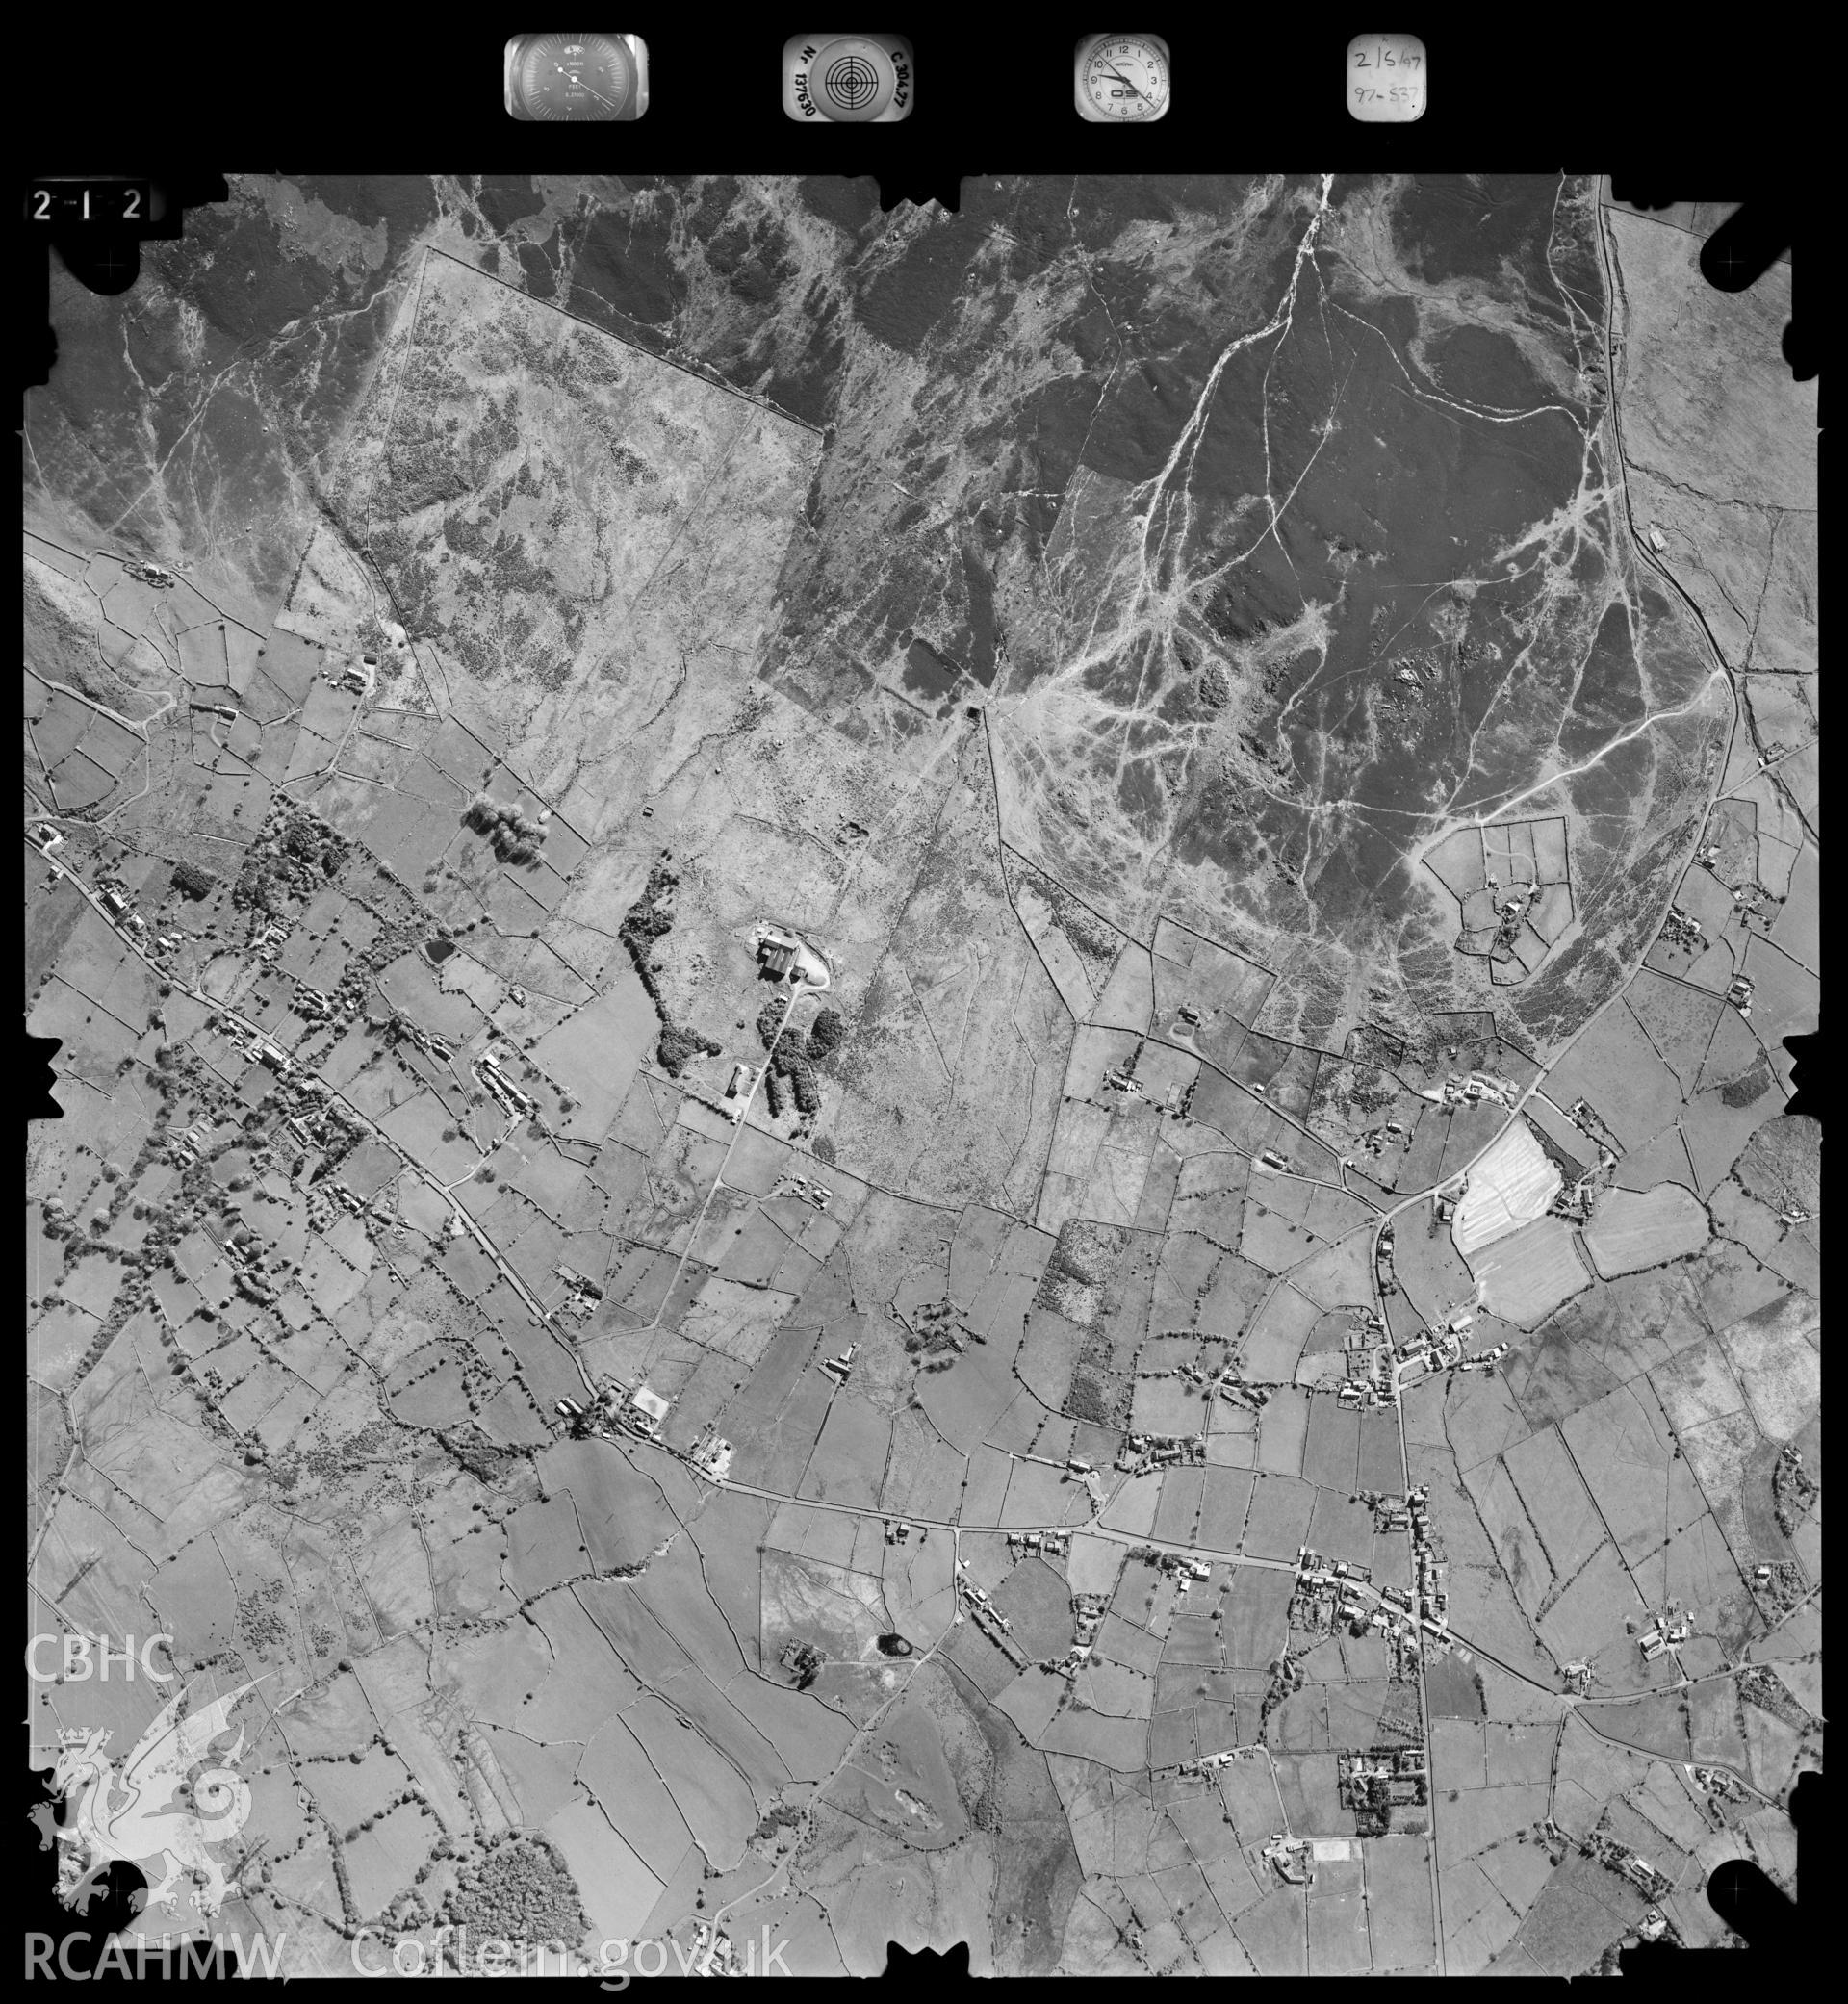 Digitized copy of an aerial photograph showing area south east of Ceunant, Caernarfon SH5361., taken by Ordnance Survey, 1997.